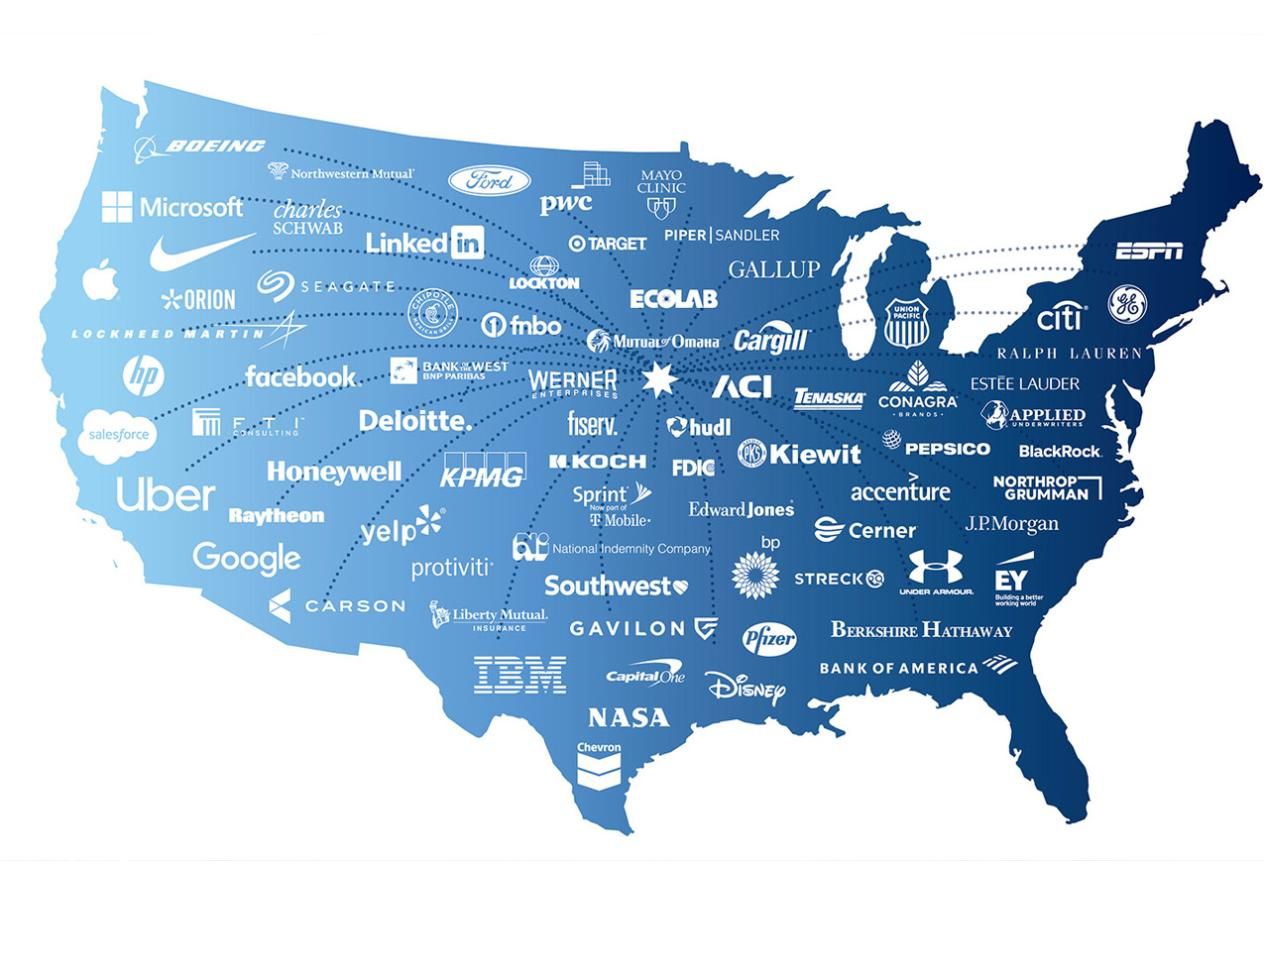 Internship companies across the U.S.